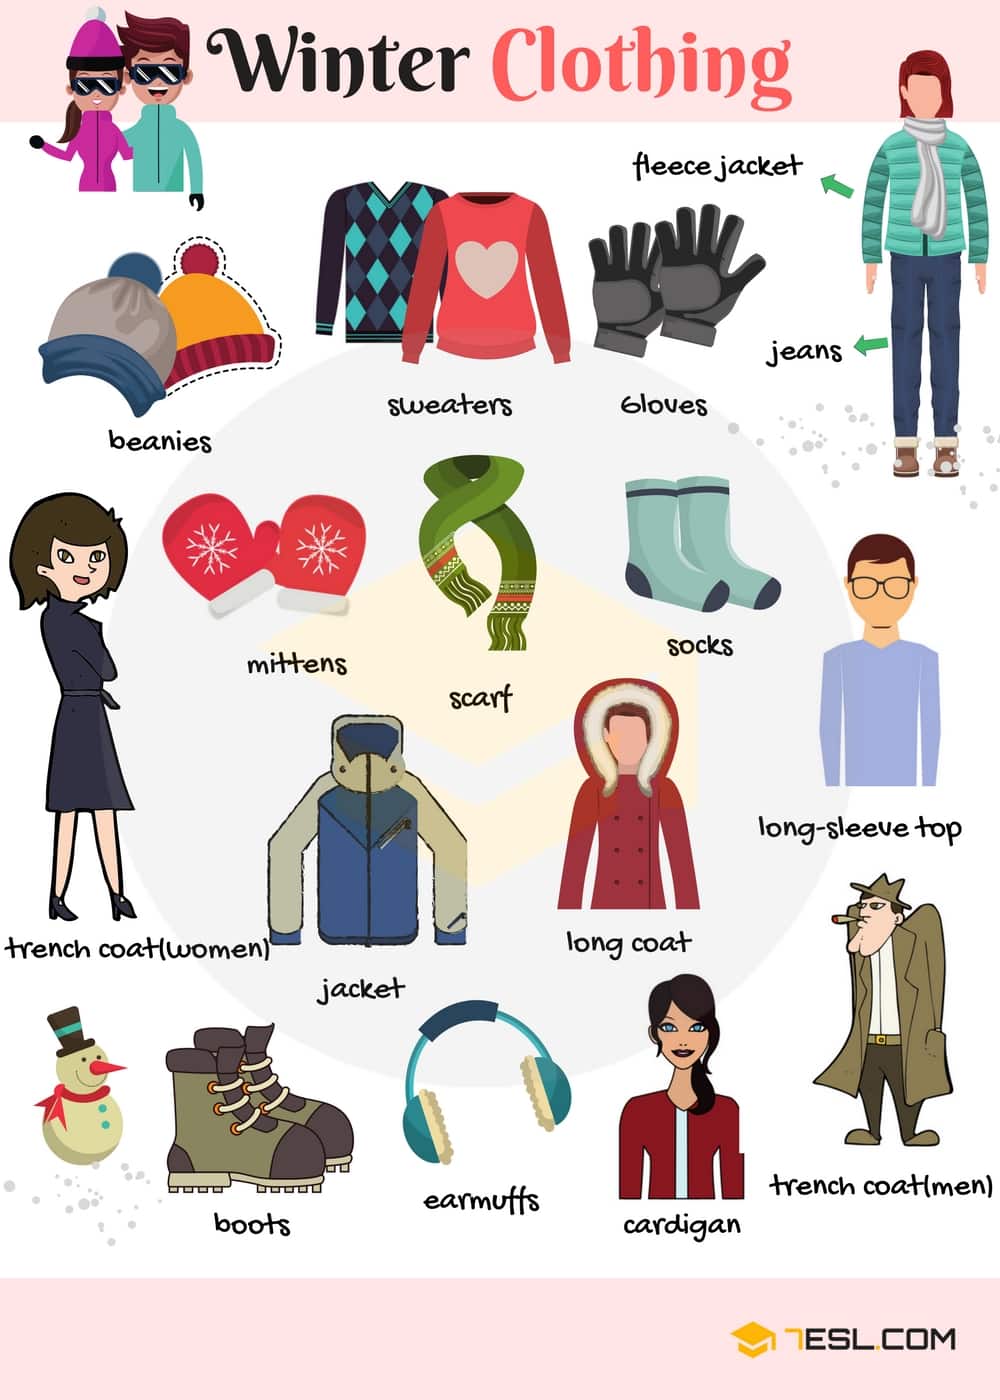 5112-winter-clothing-vocabulary.jpeg